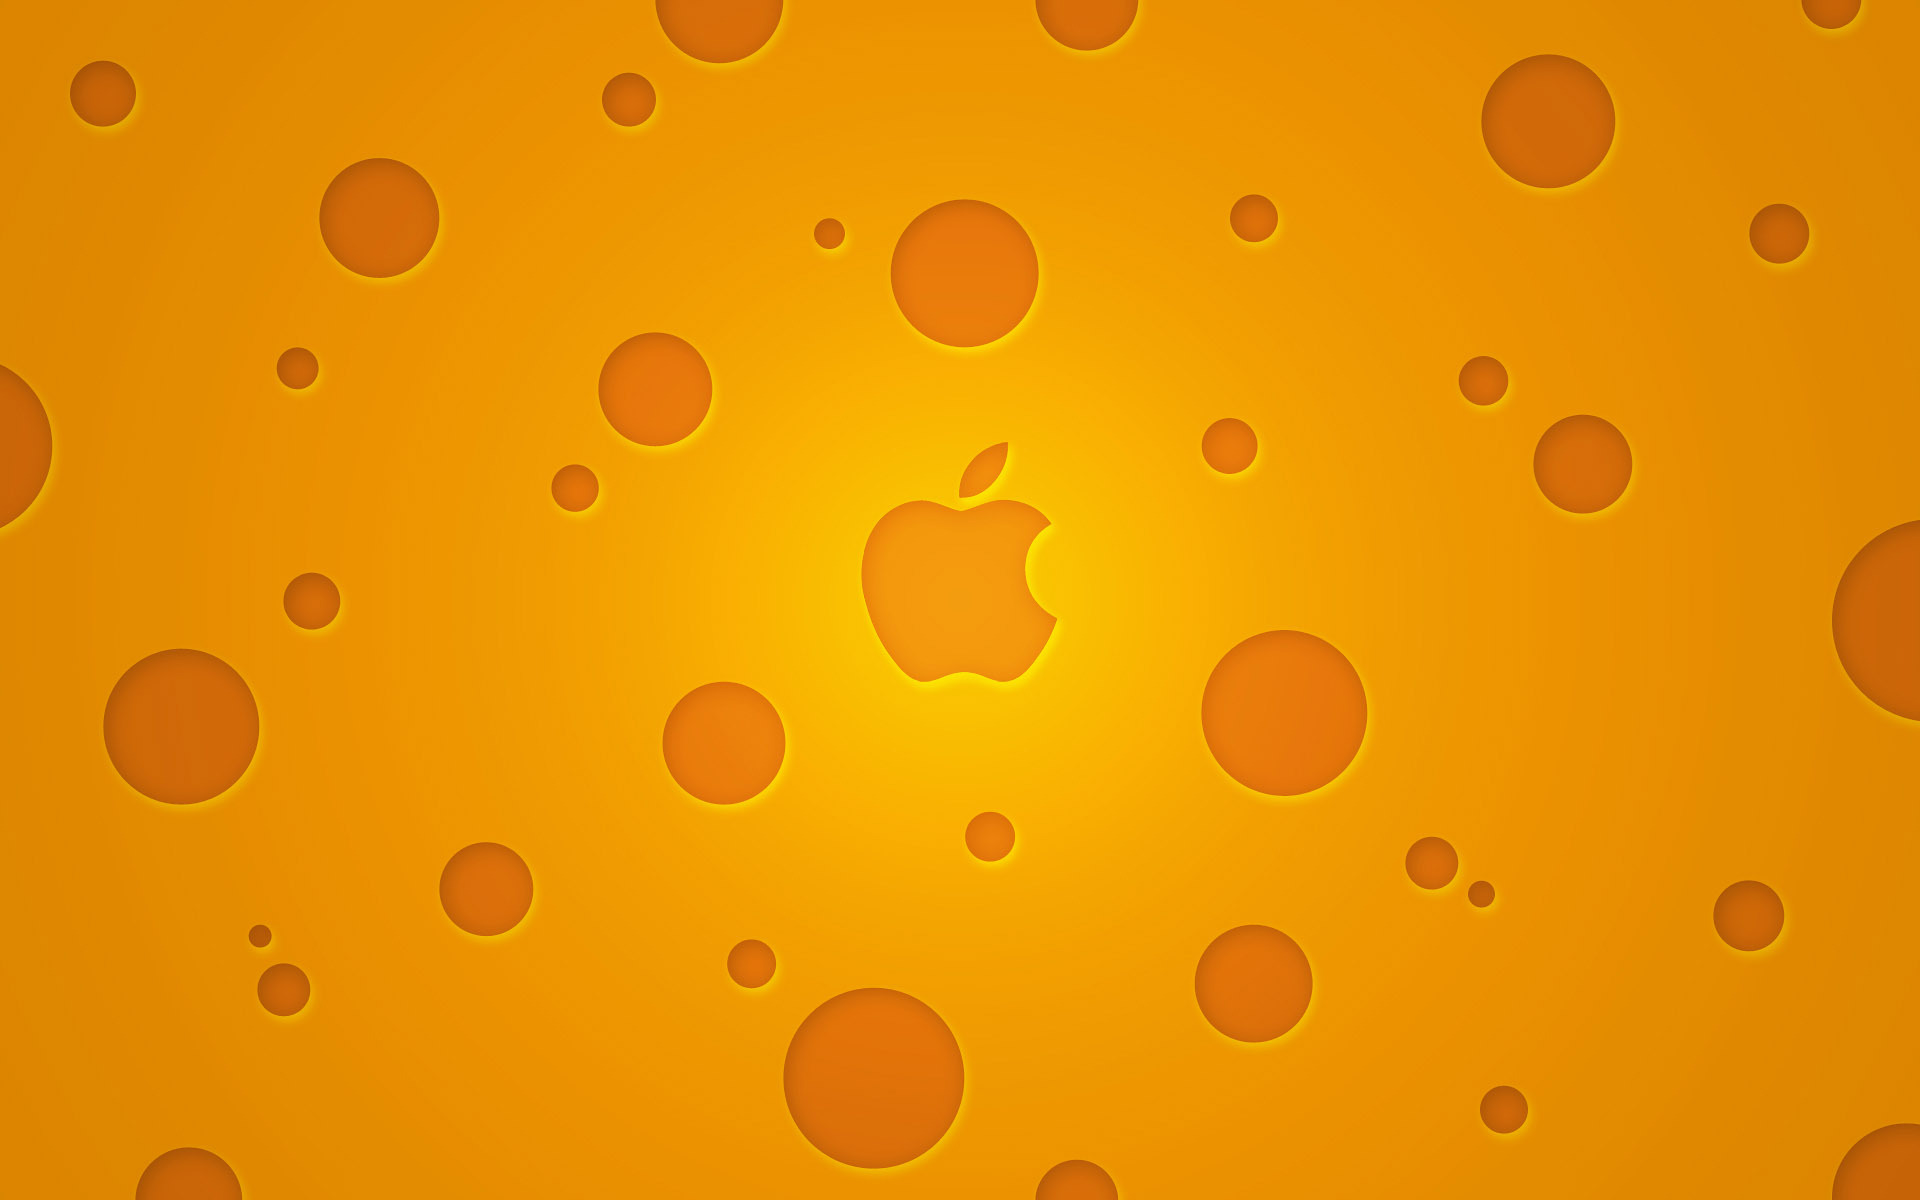 Random tech apple logo